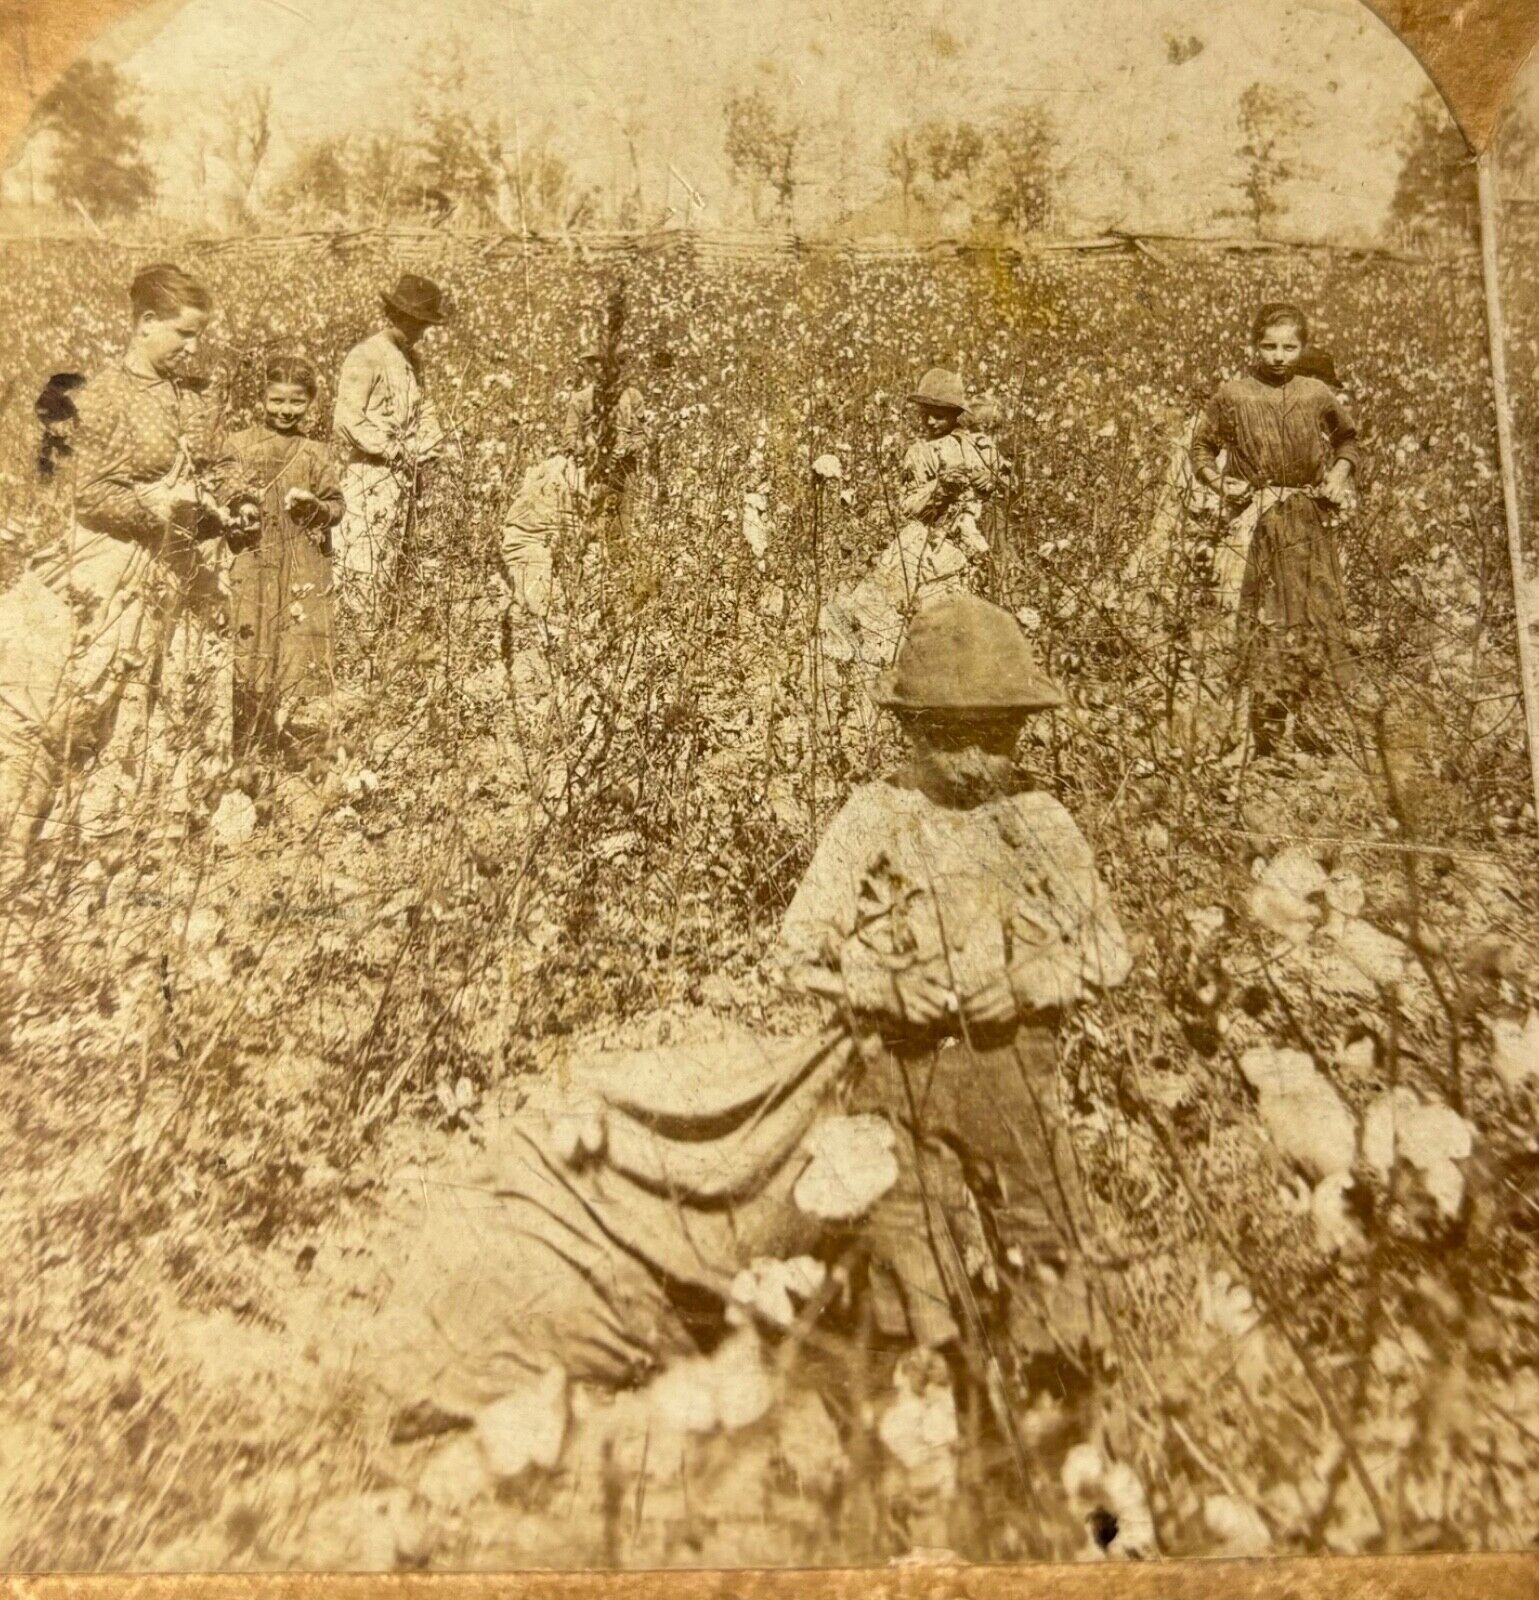 1900s White COTTON PICKERS Corning AR Arkansas FARMING Antique PHOTO Stereoview